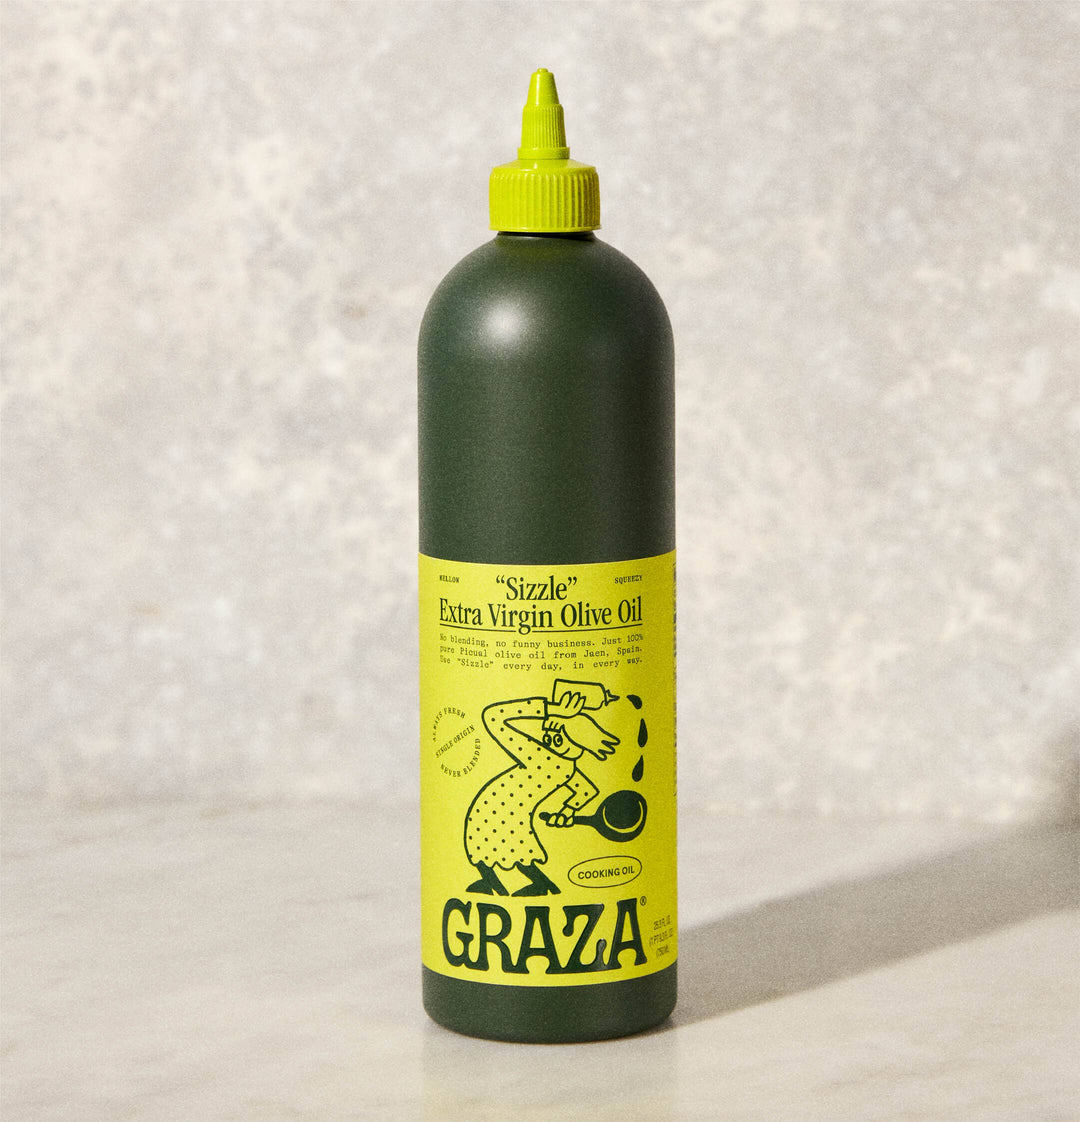 Graza - "Sizzle" Extra Virgin Olive Oil